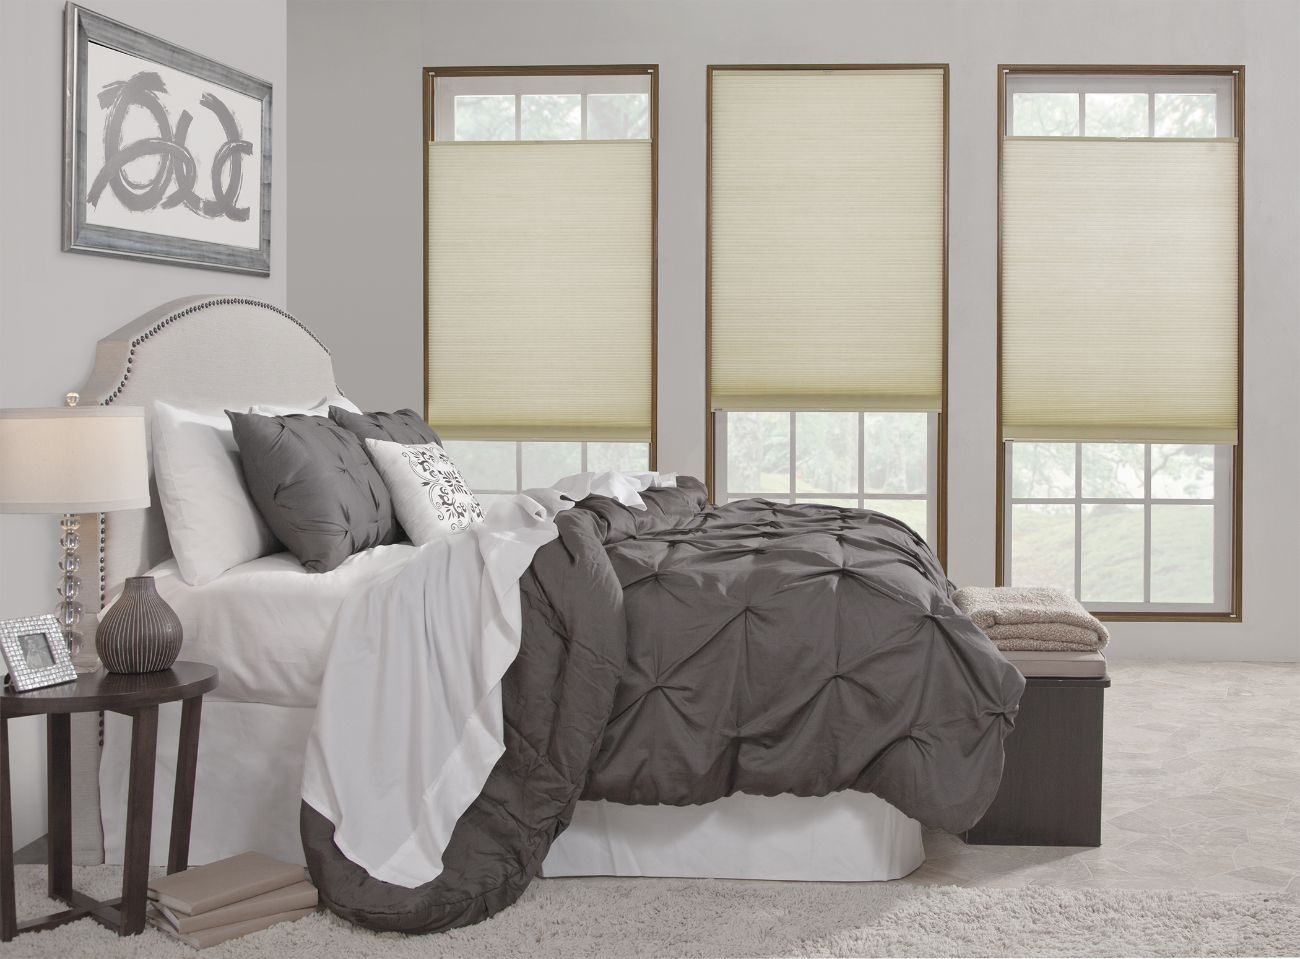 Honeycomb window shades in bedroom